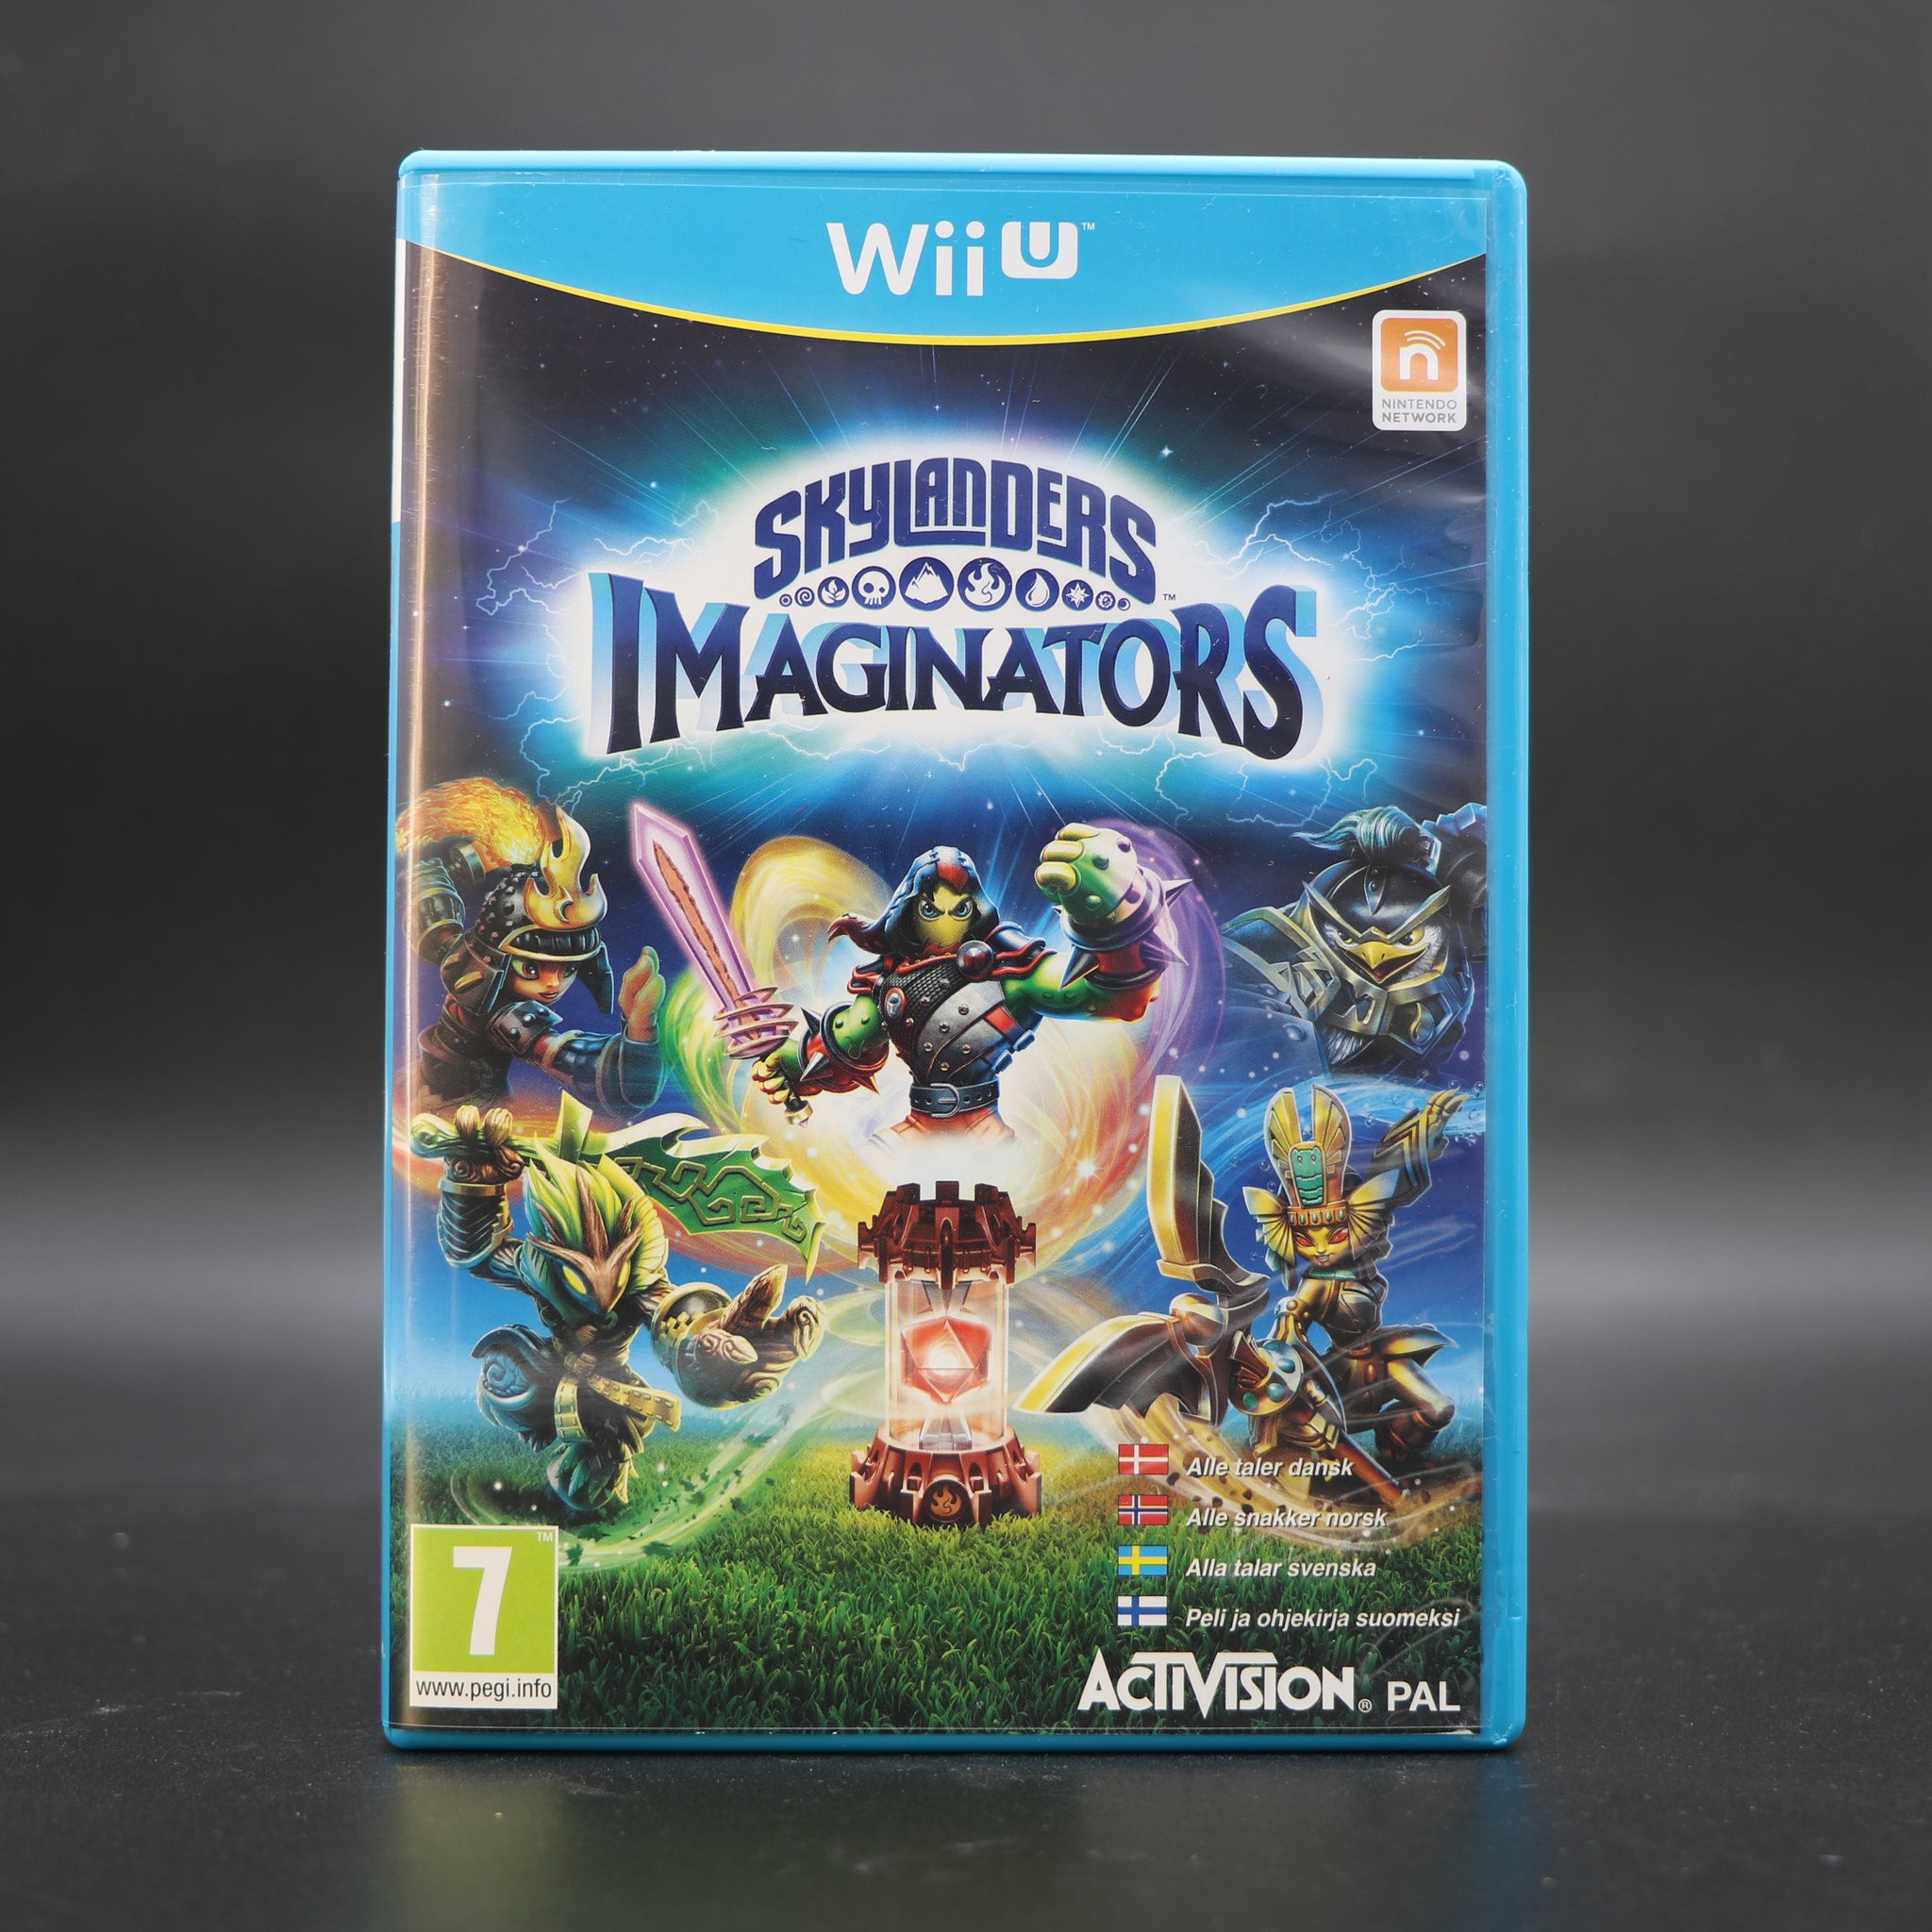 Skylanders Imaginators | Nintendo WiiU WII U Game Software Disc | New Not Sealed